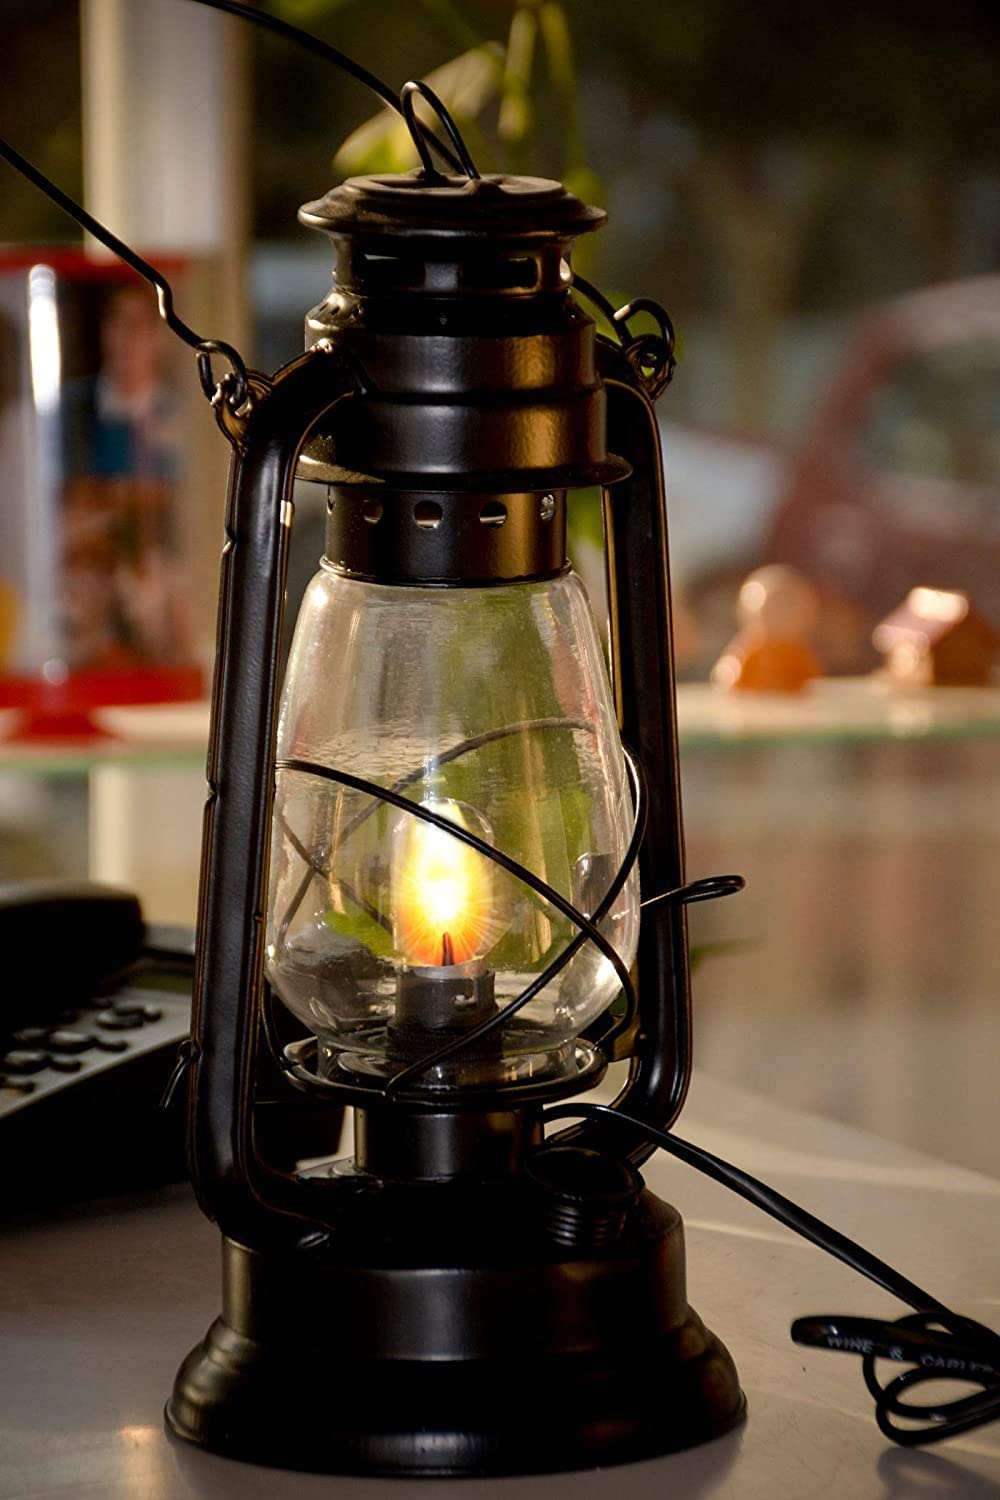 Lamansh Electric lantern Black / Glass & Metal / Standard LAMANSH® Decorative Electric Metal Hanging Lantern for Hotel , Resorts decoration / Ideal for Christmas & New Year party decorations